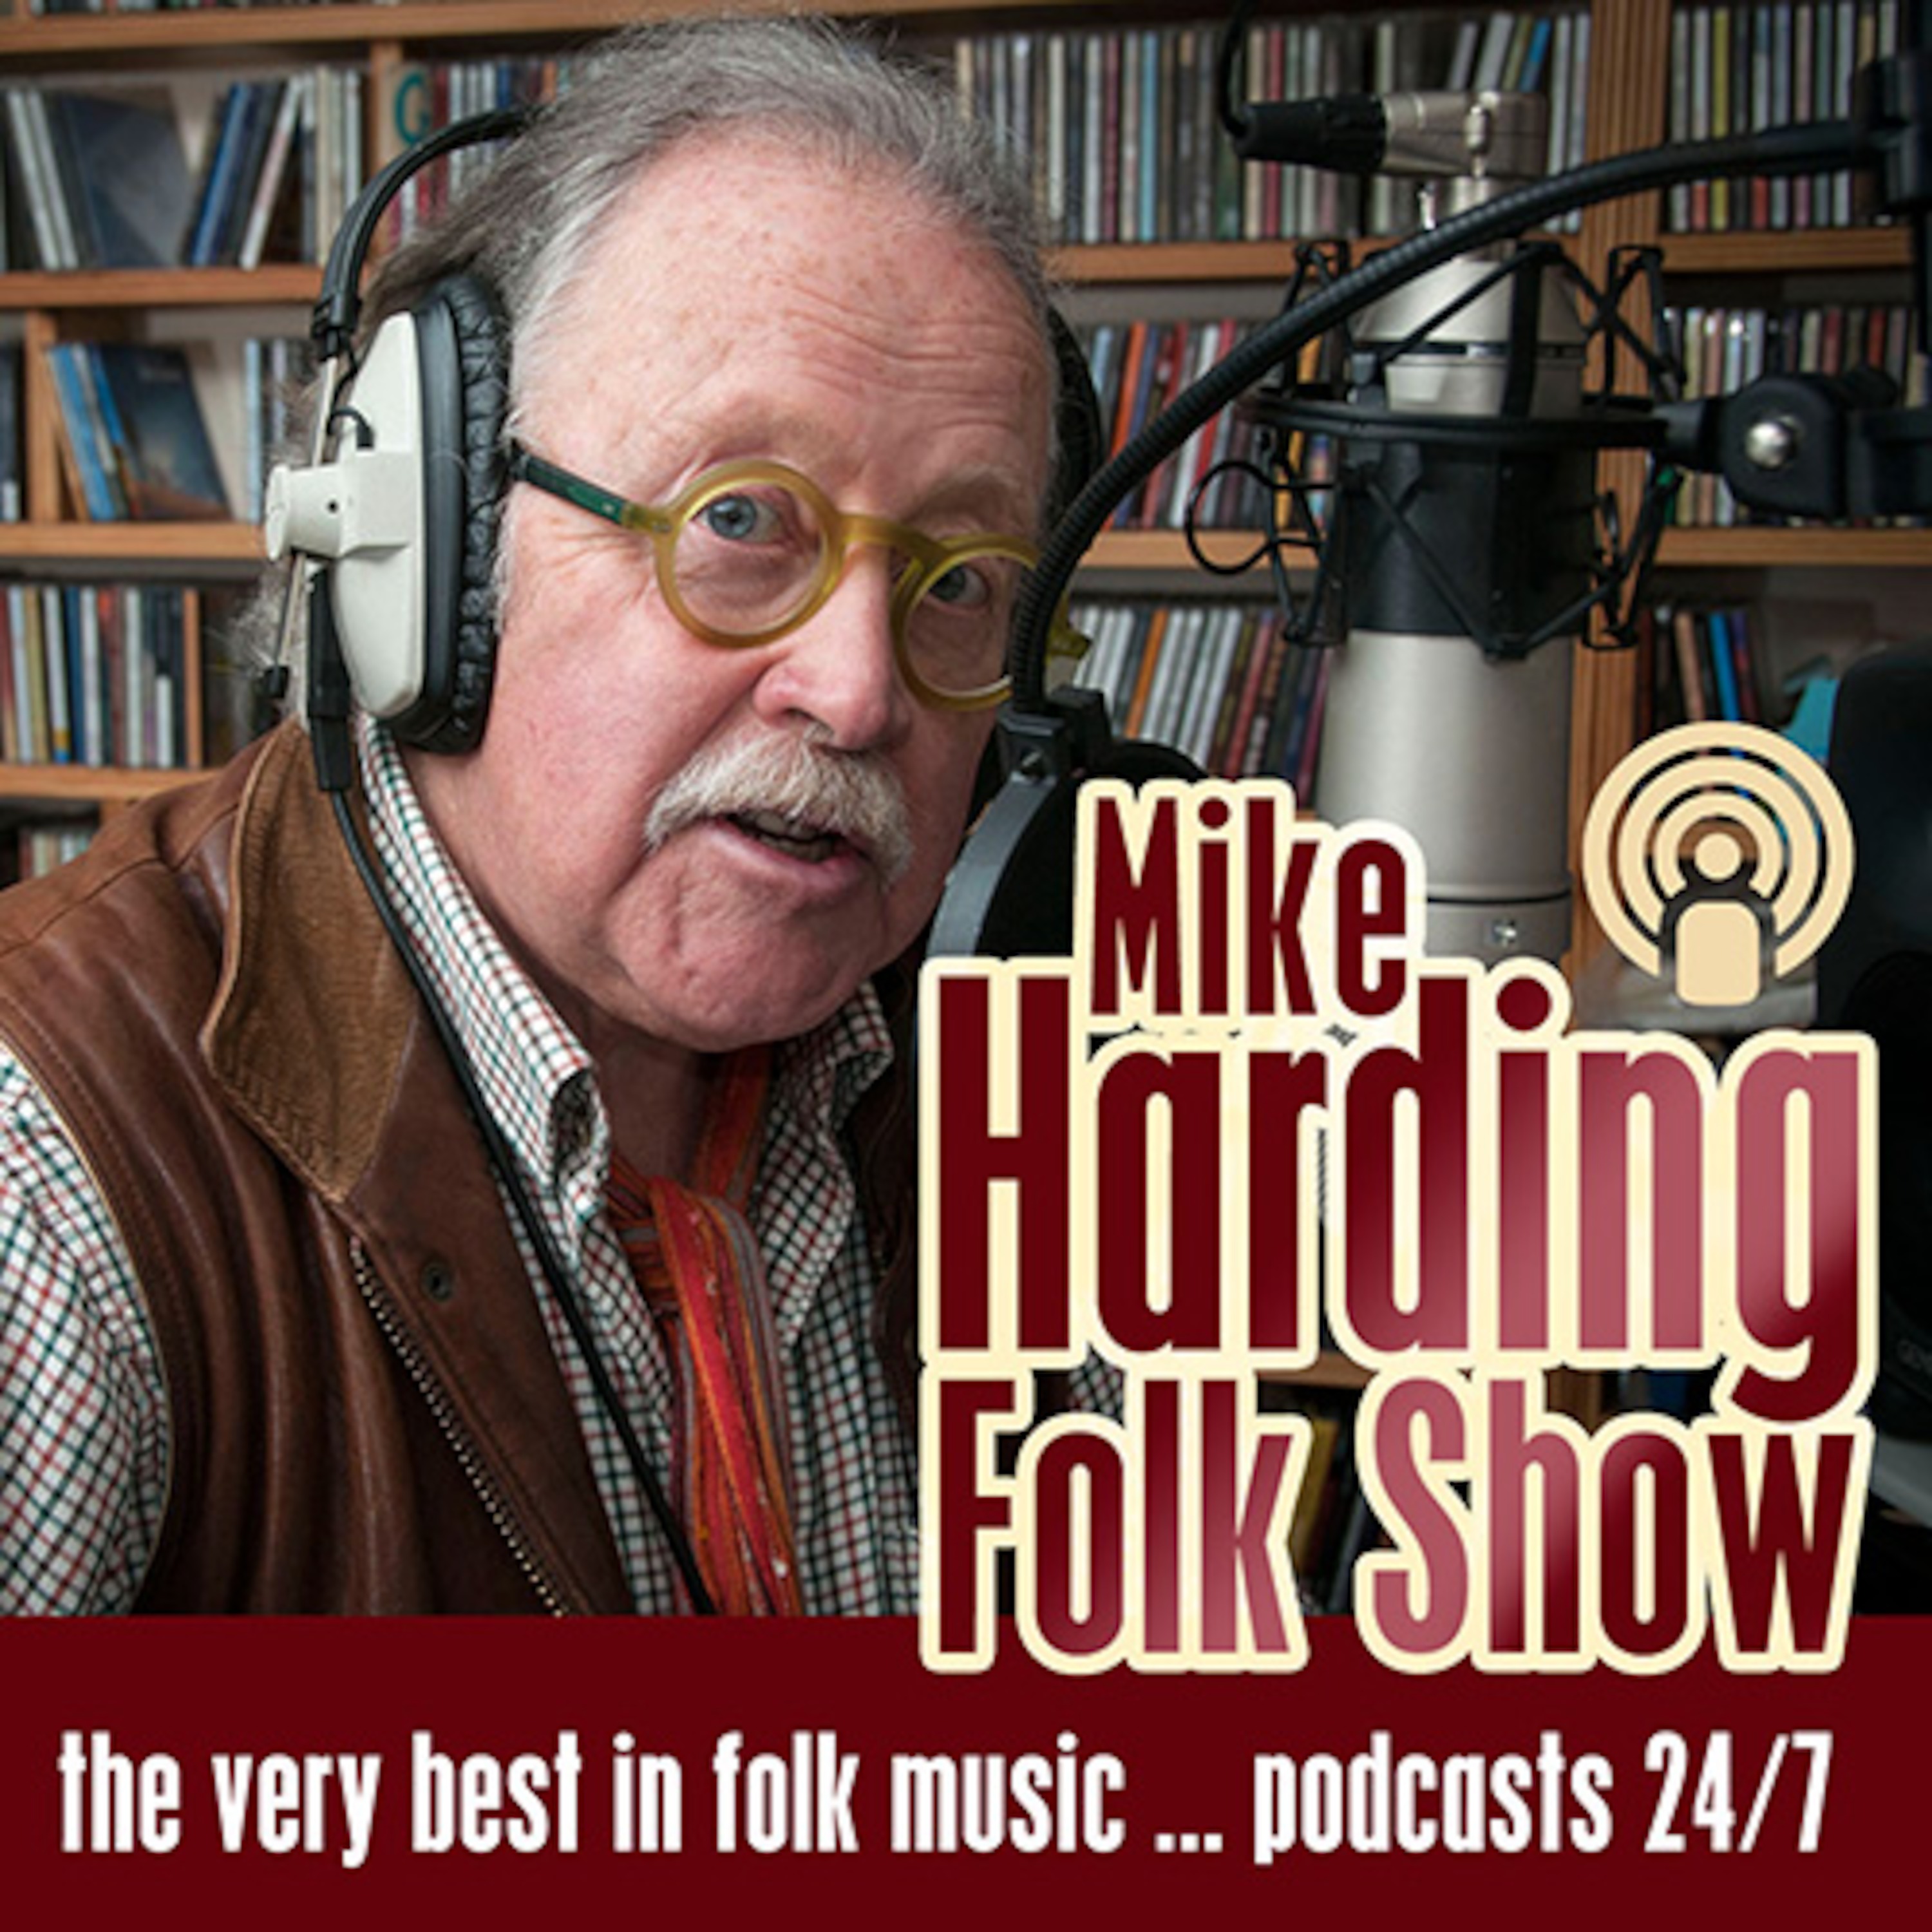 Mike Harding Folk Show 183